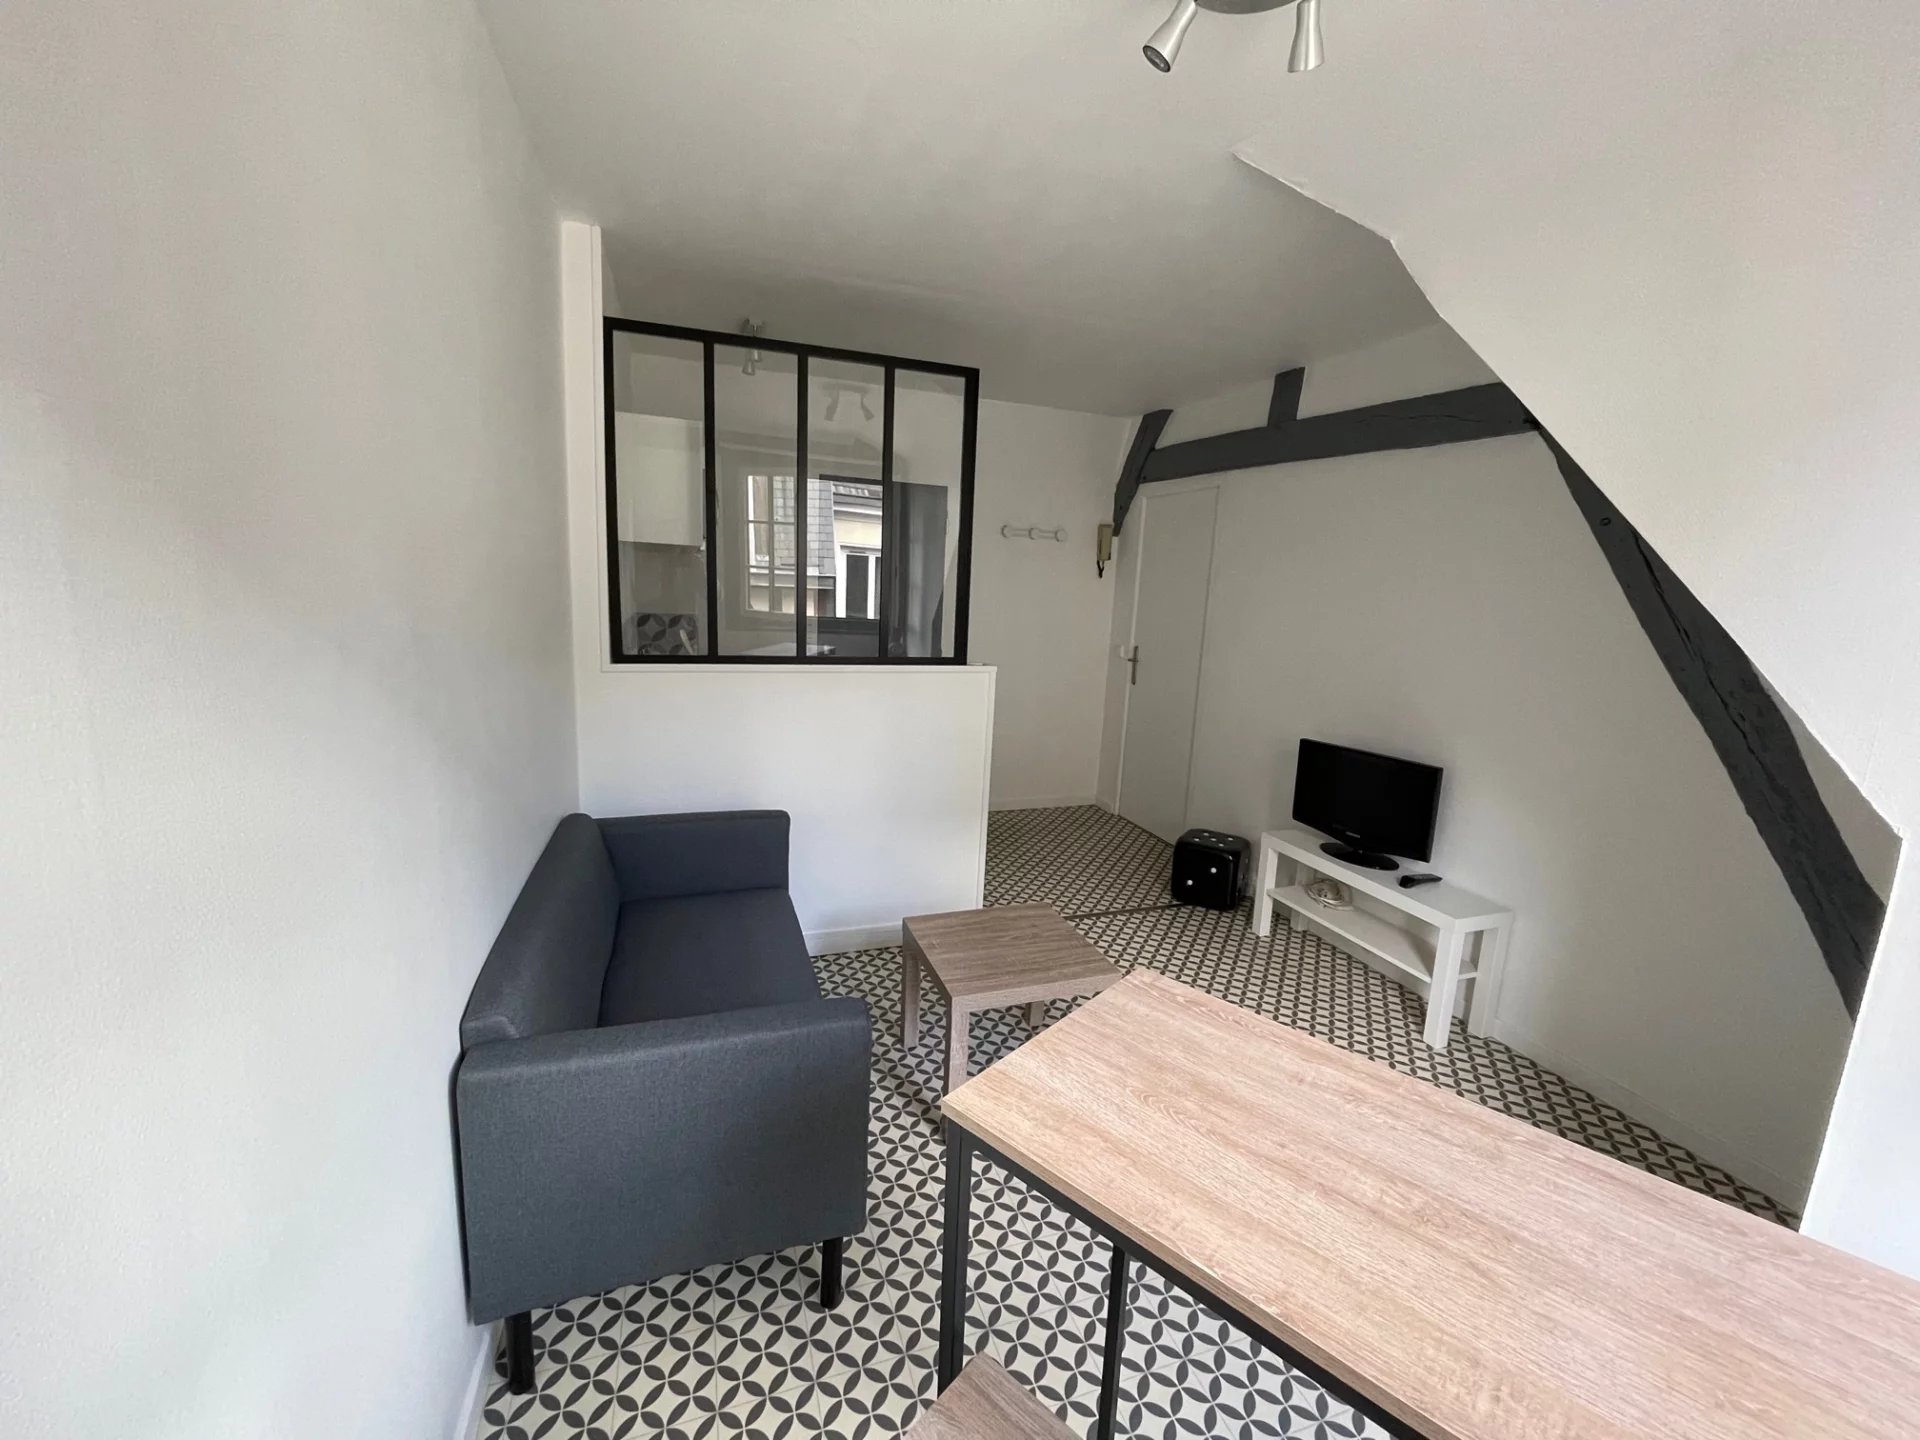 Rental Apartment - Rouen